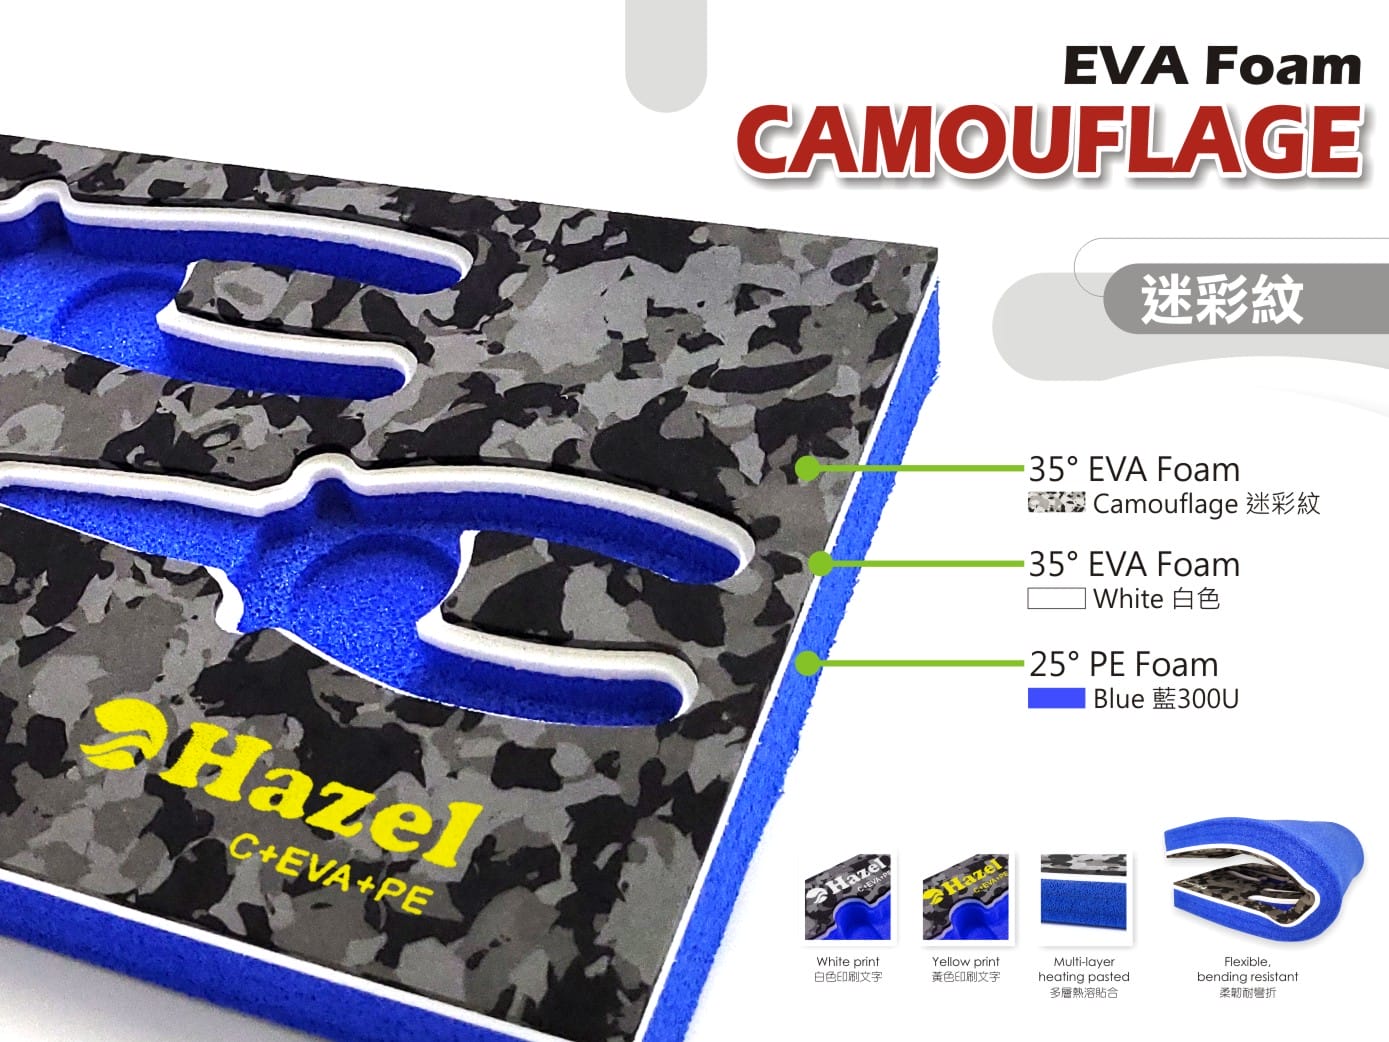 Camouflage EVA Foam tray